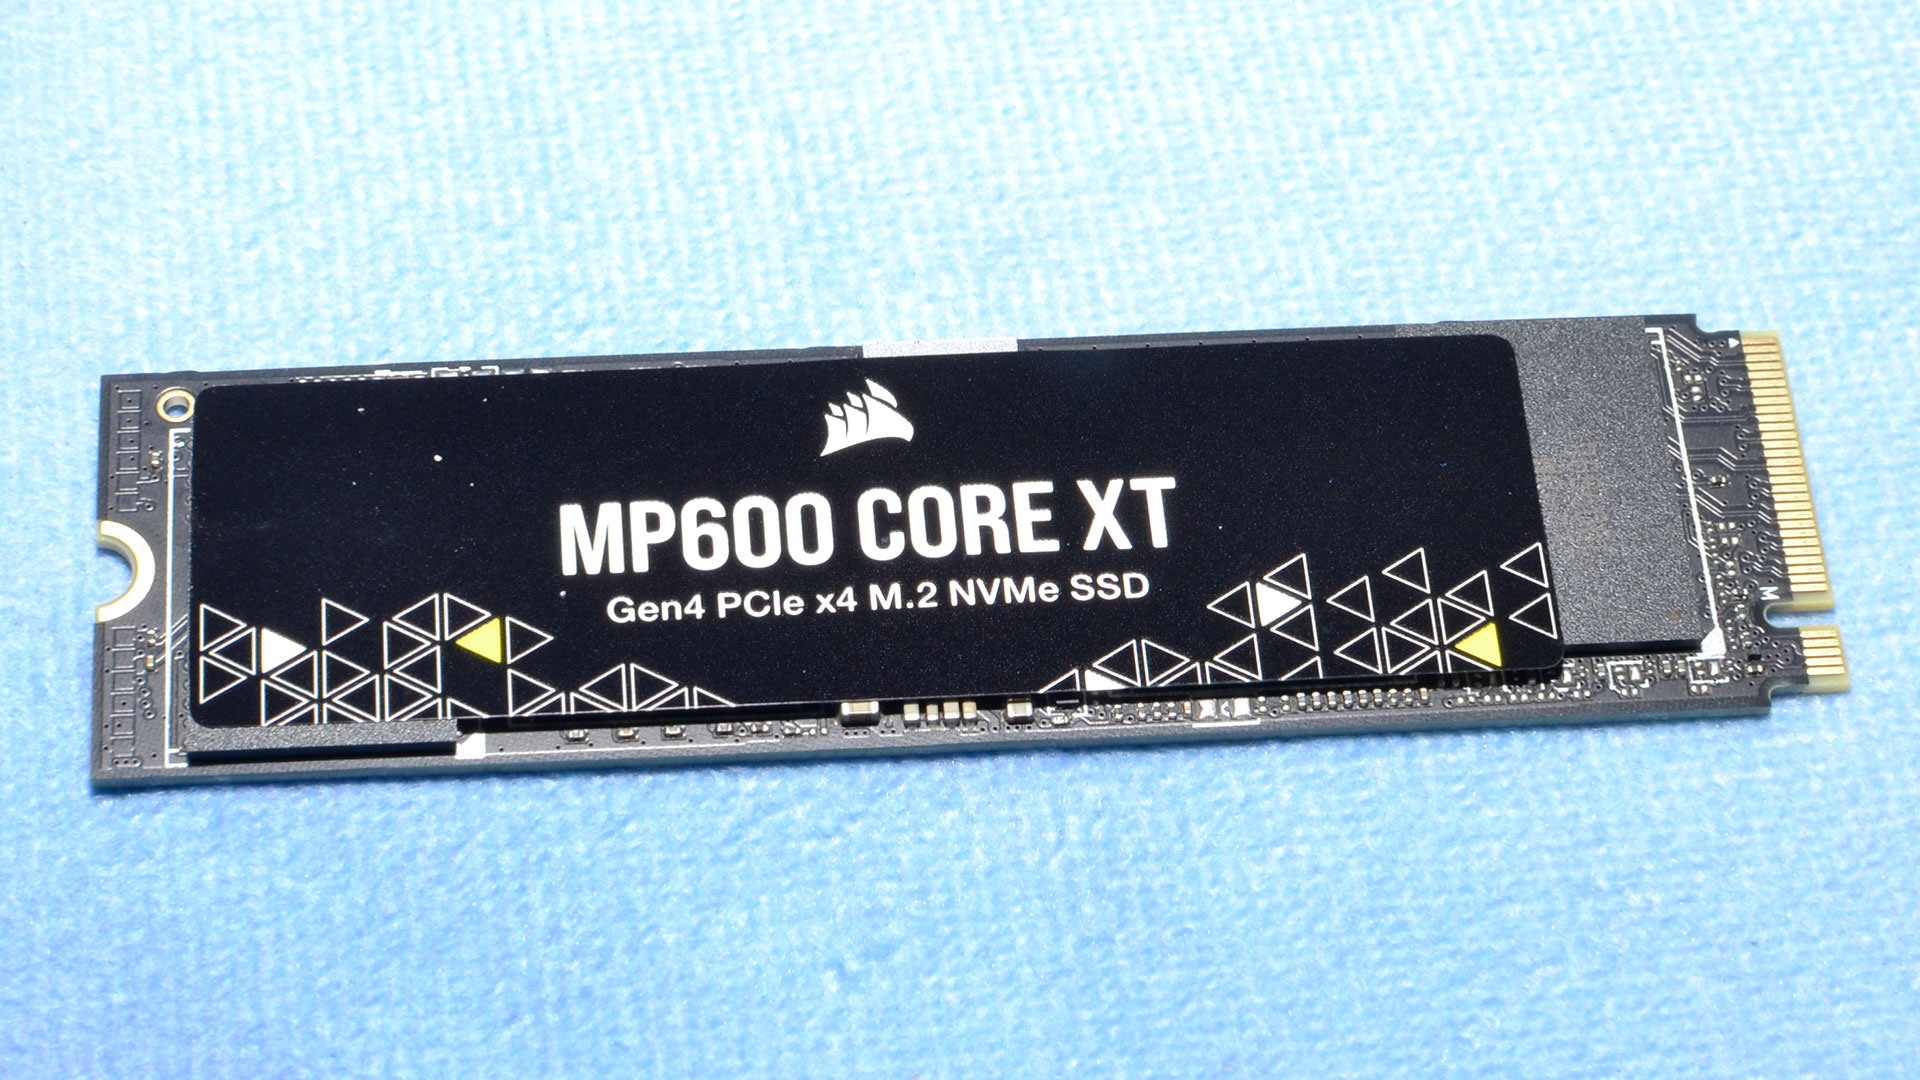 Corsair MP600 Core XT 2 TB Review